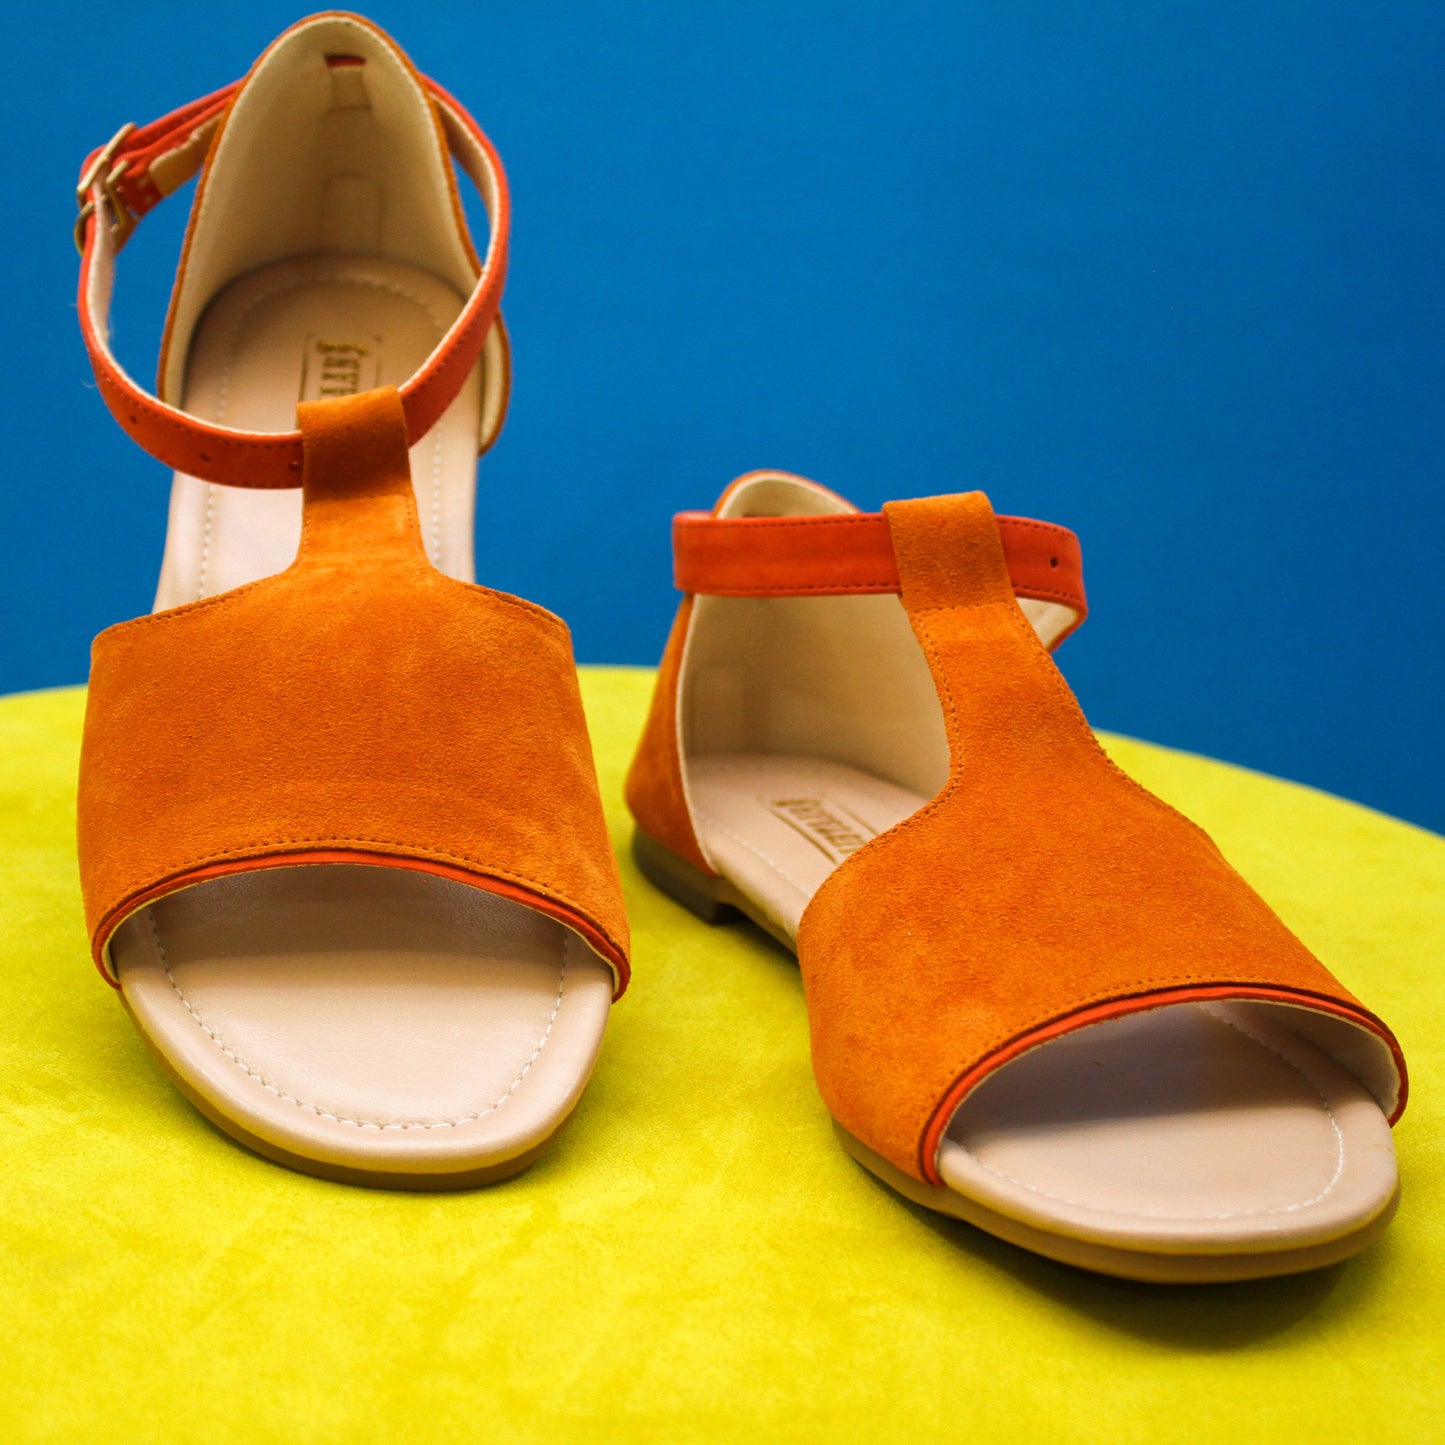 Handmade Orange Suede Leather Flat Sandals